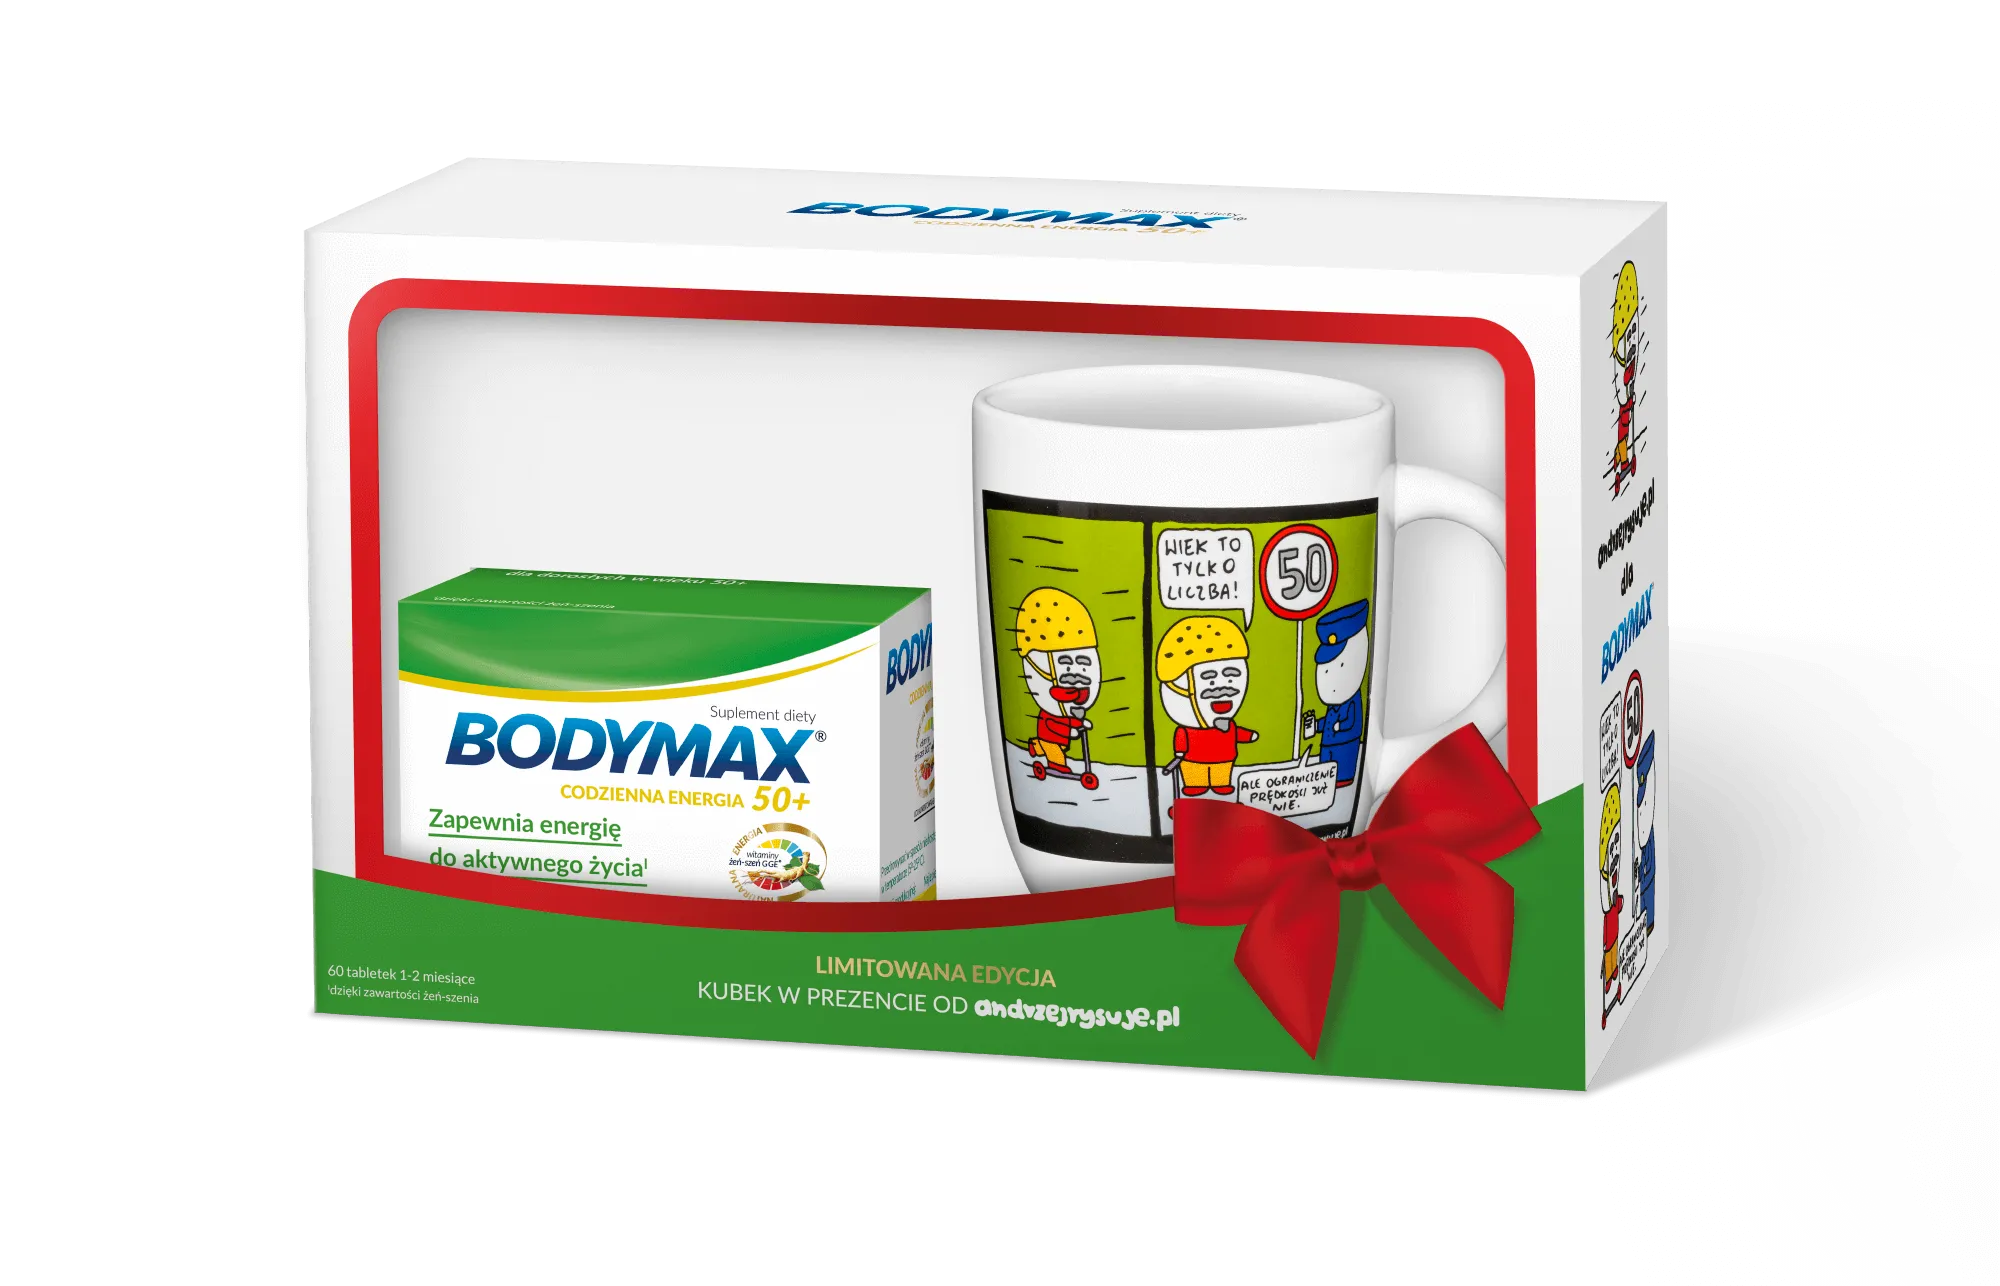 Bodymax 50+, suplement diety, 60 tabletek + kubek w prezencie